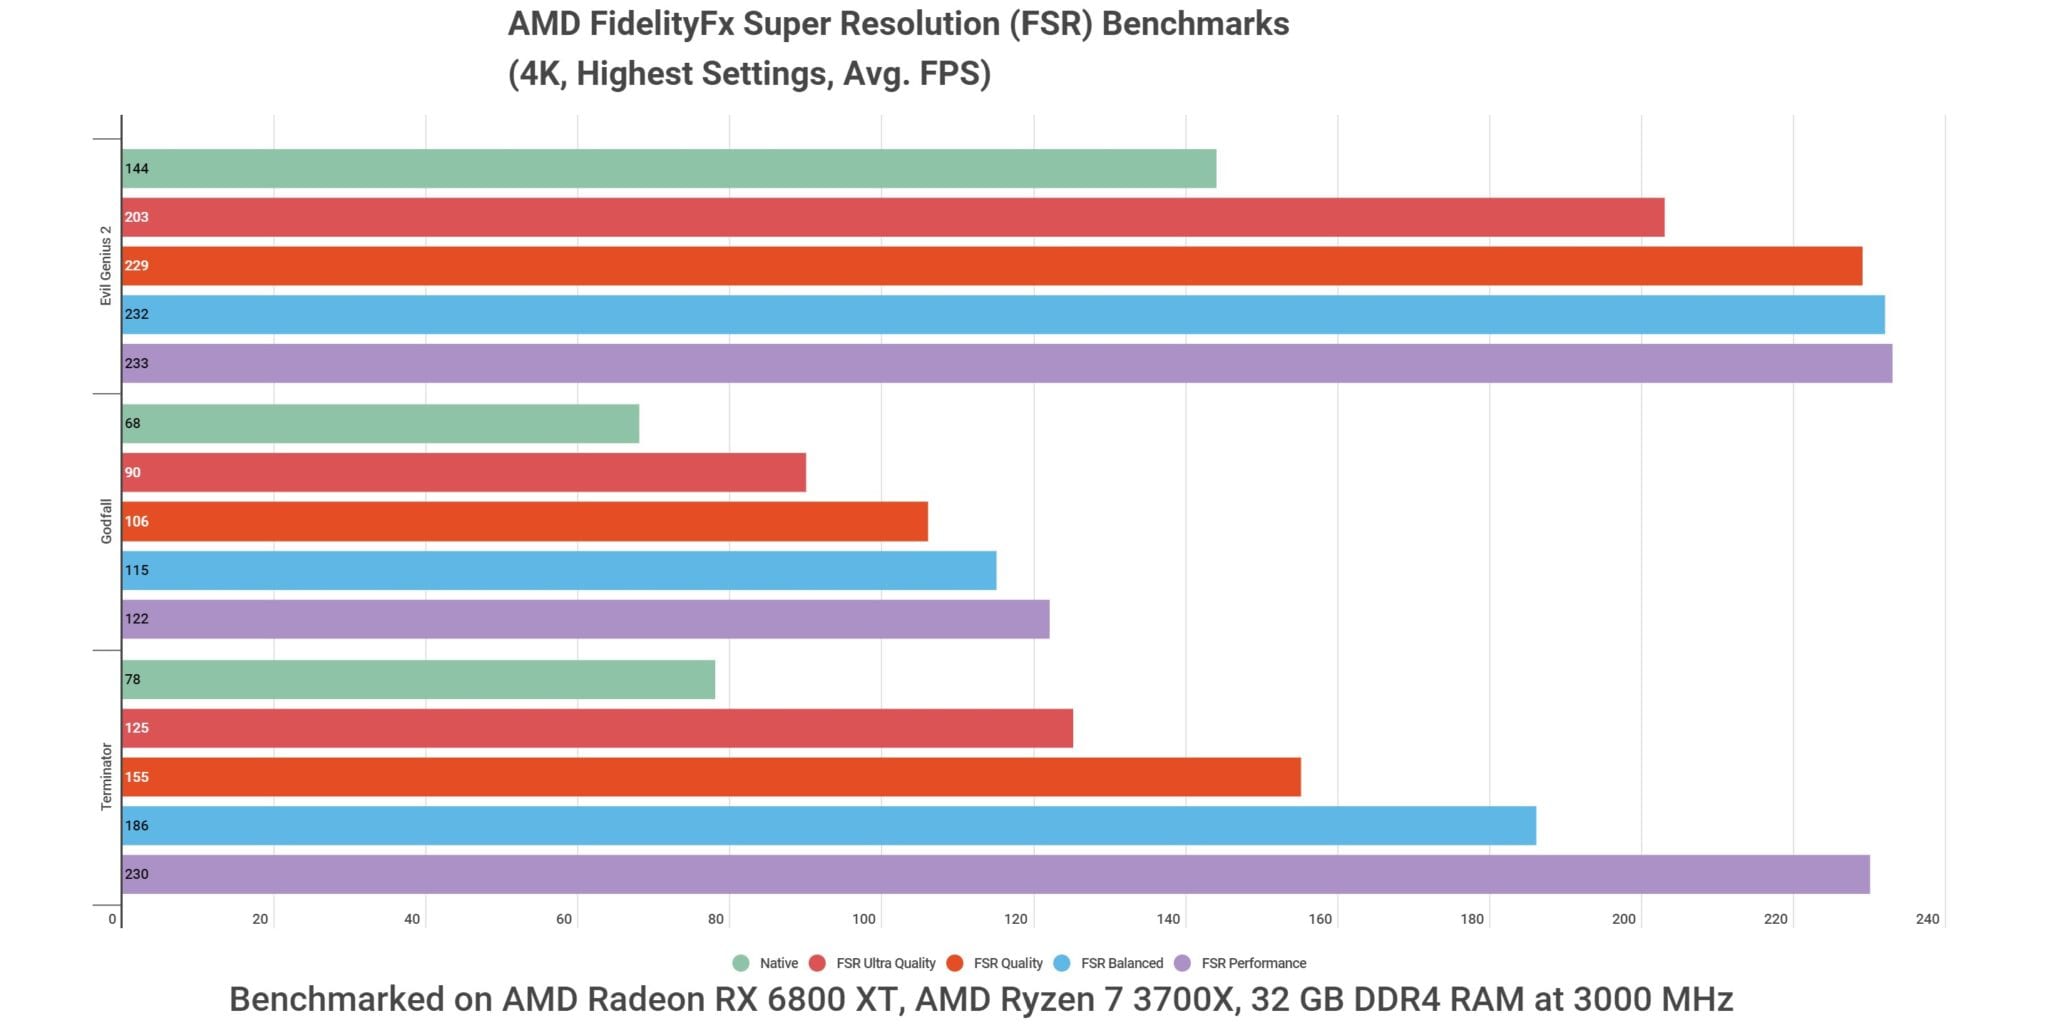 AMD FidelityFx Super Resolution 4K Benchmarks